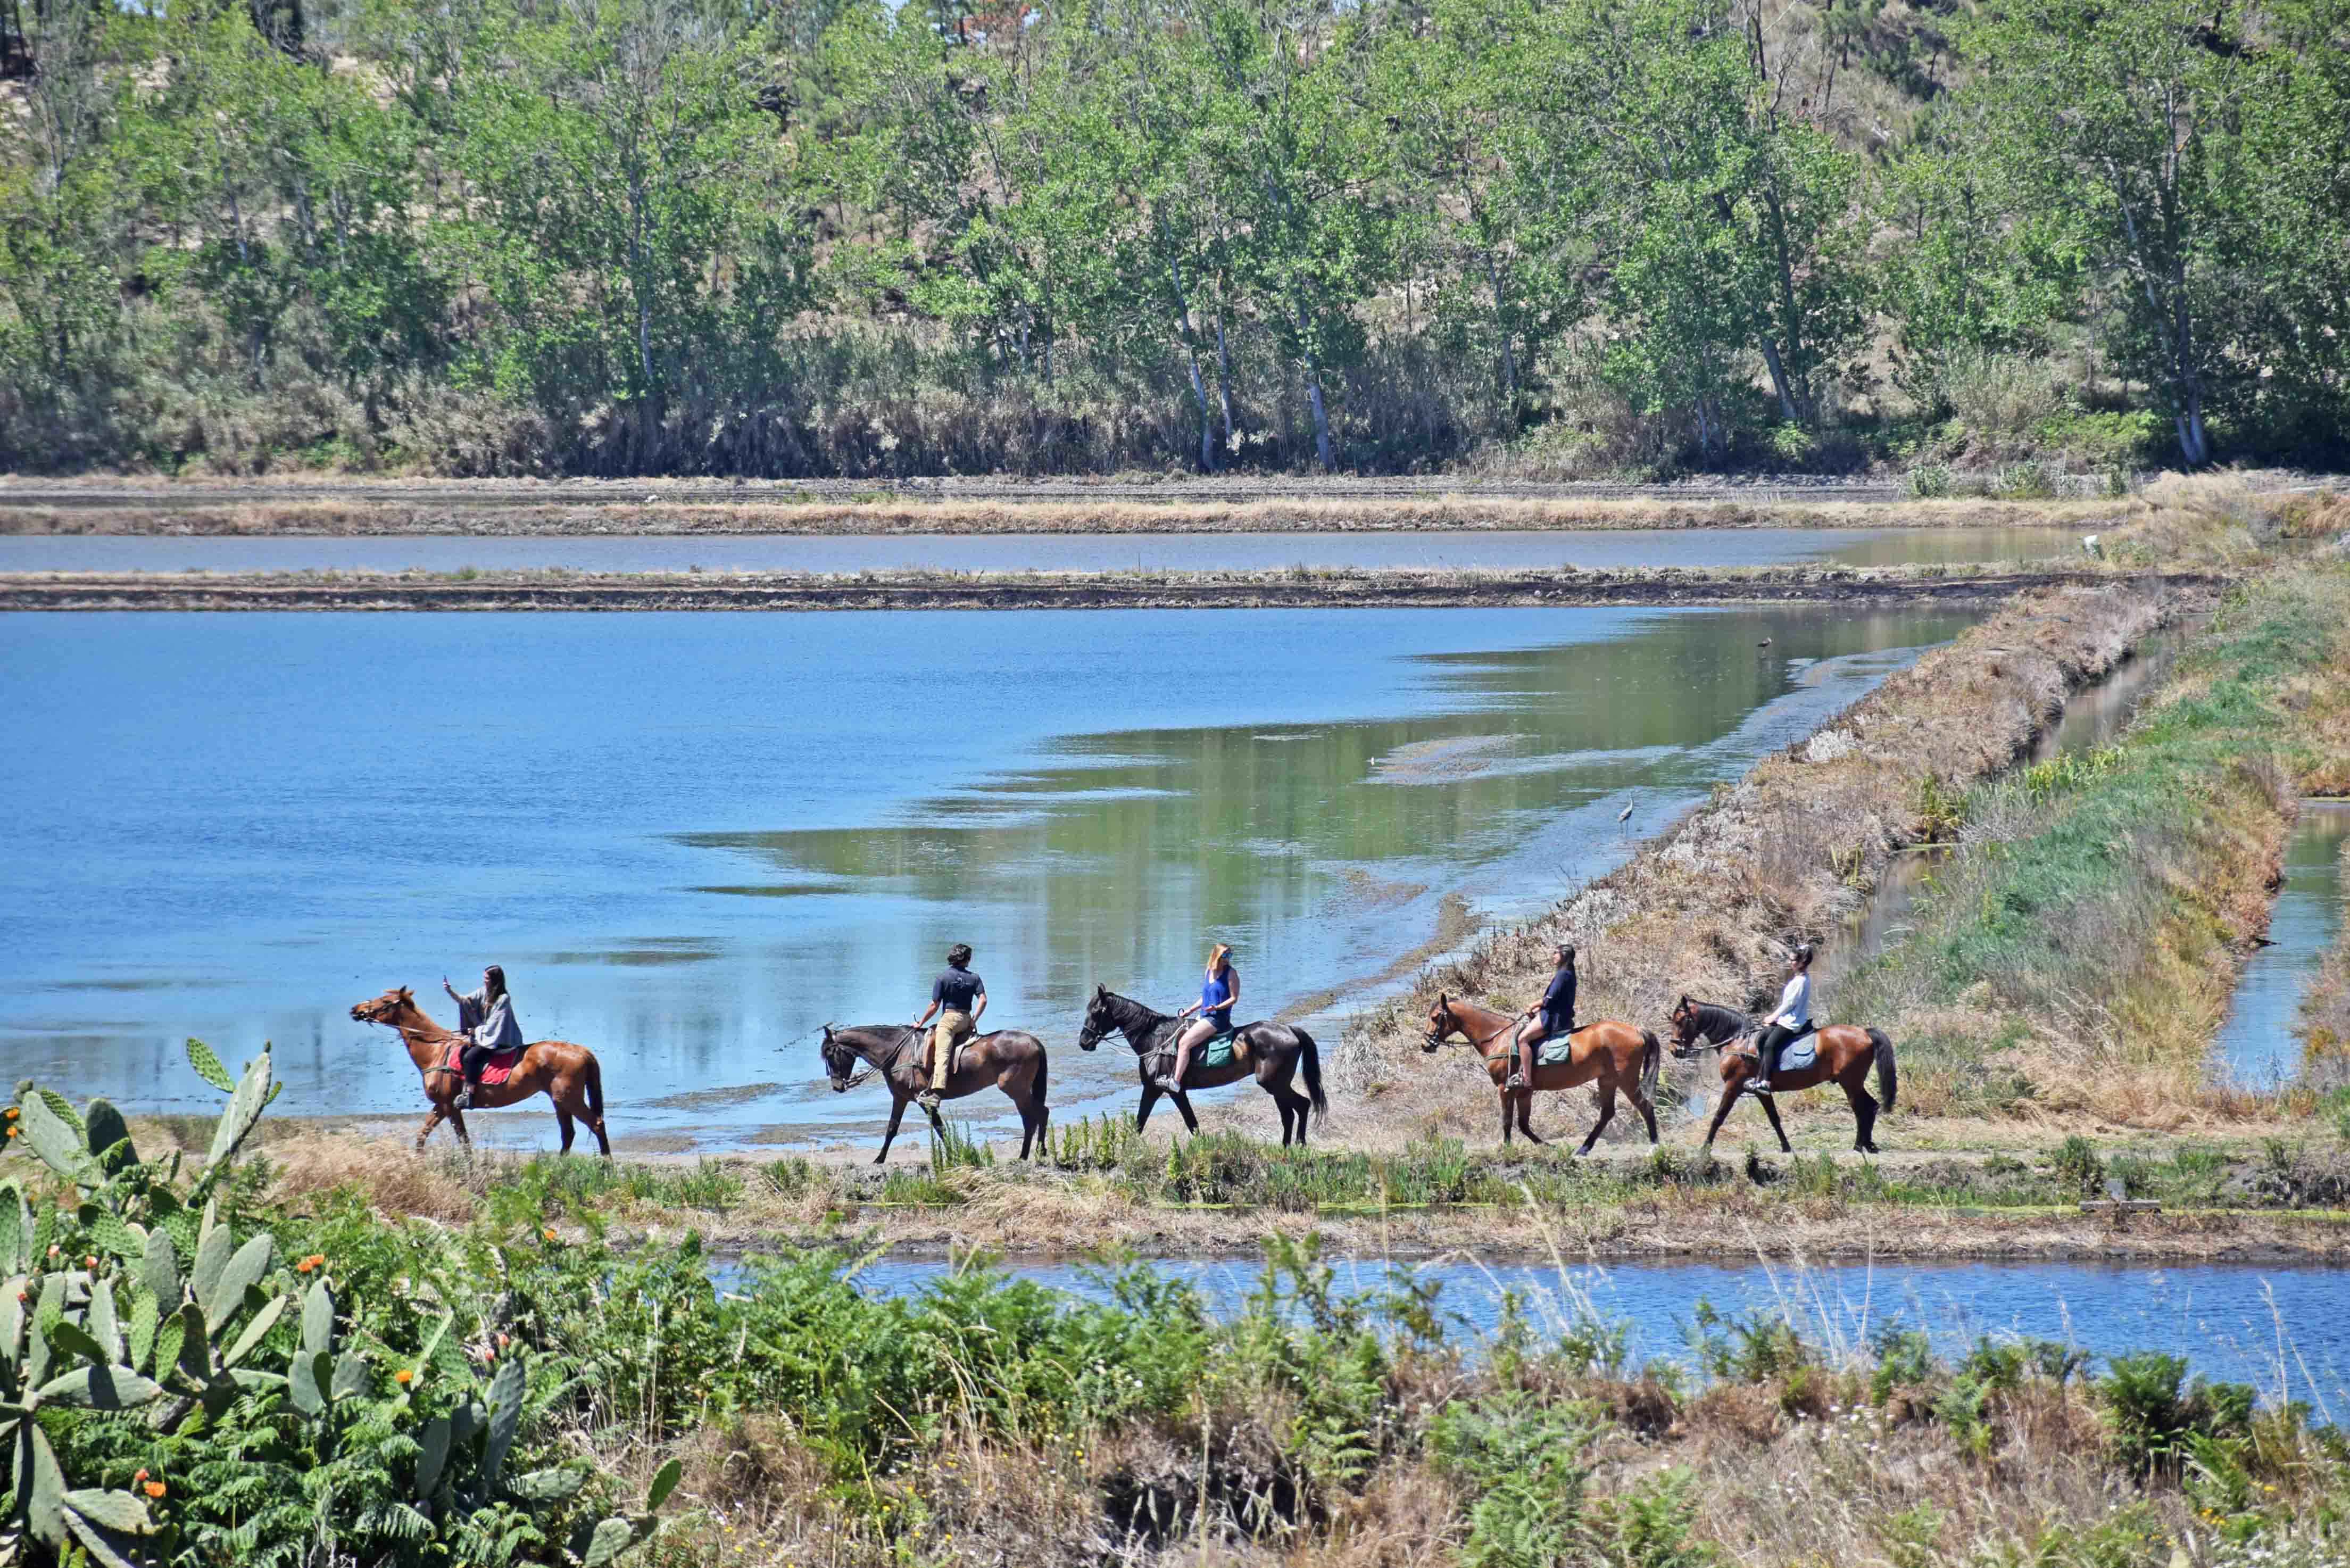 Cavalos na Areia - Comporta - Portugal